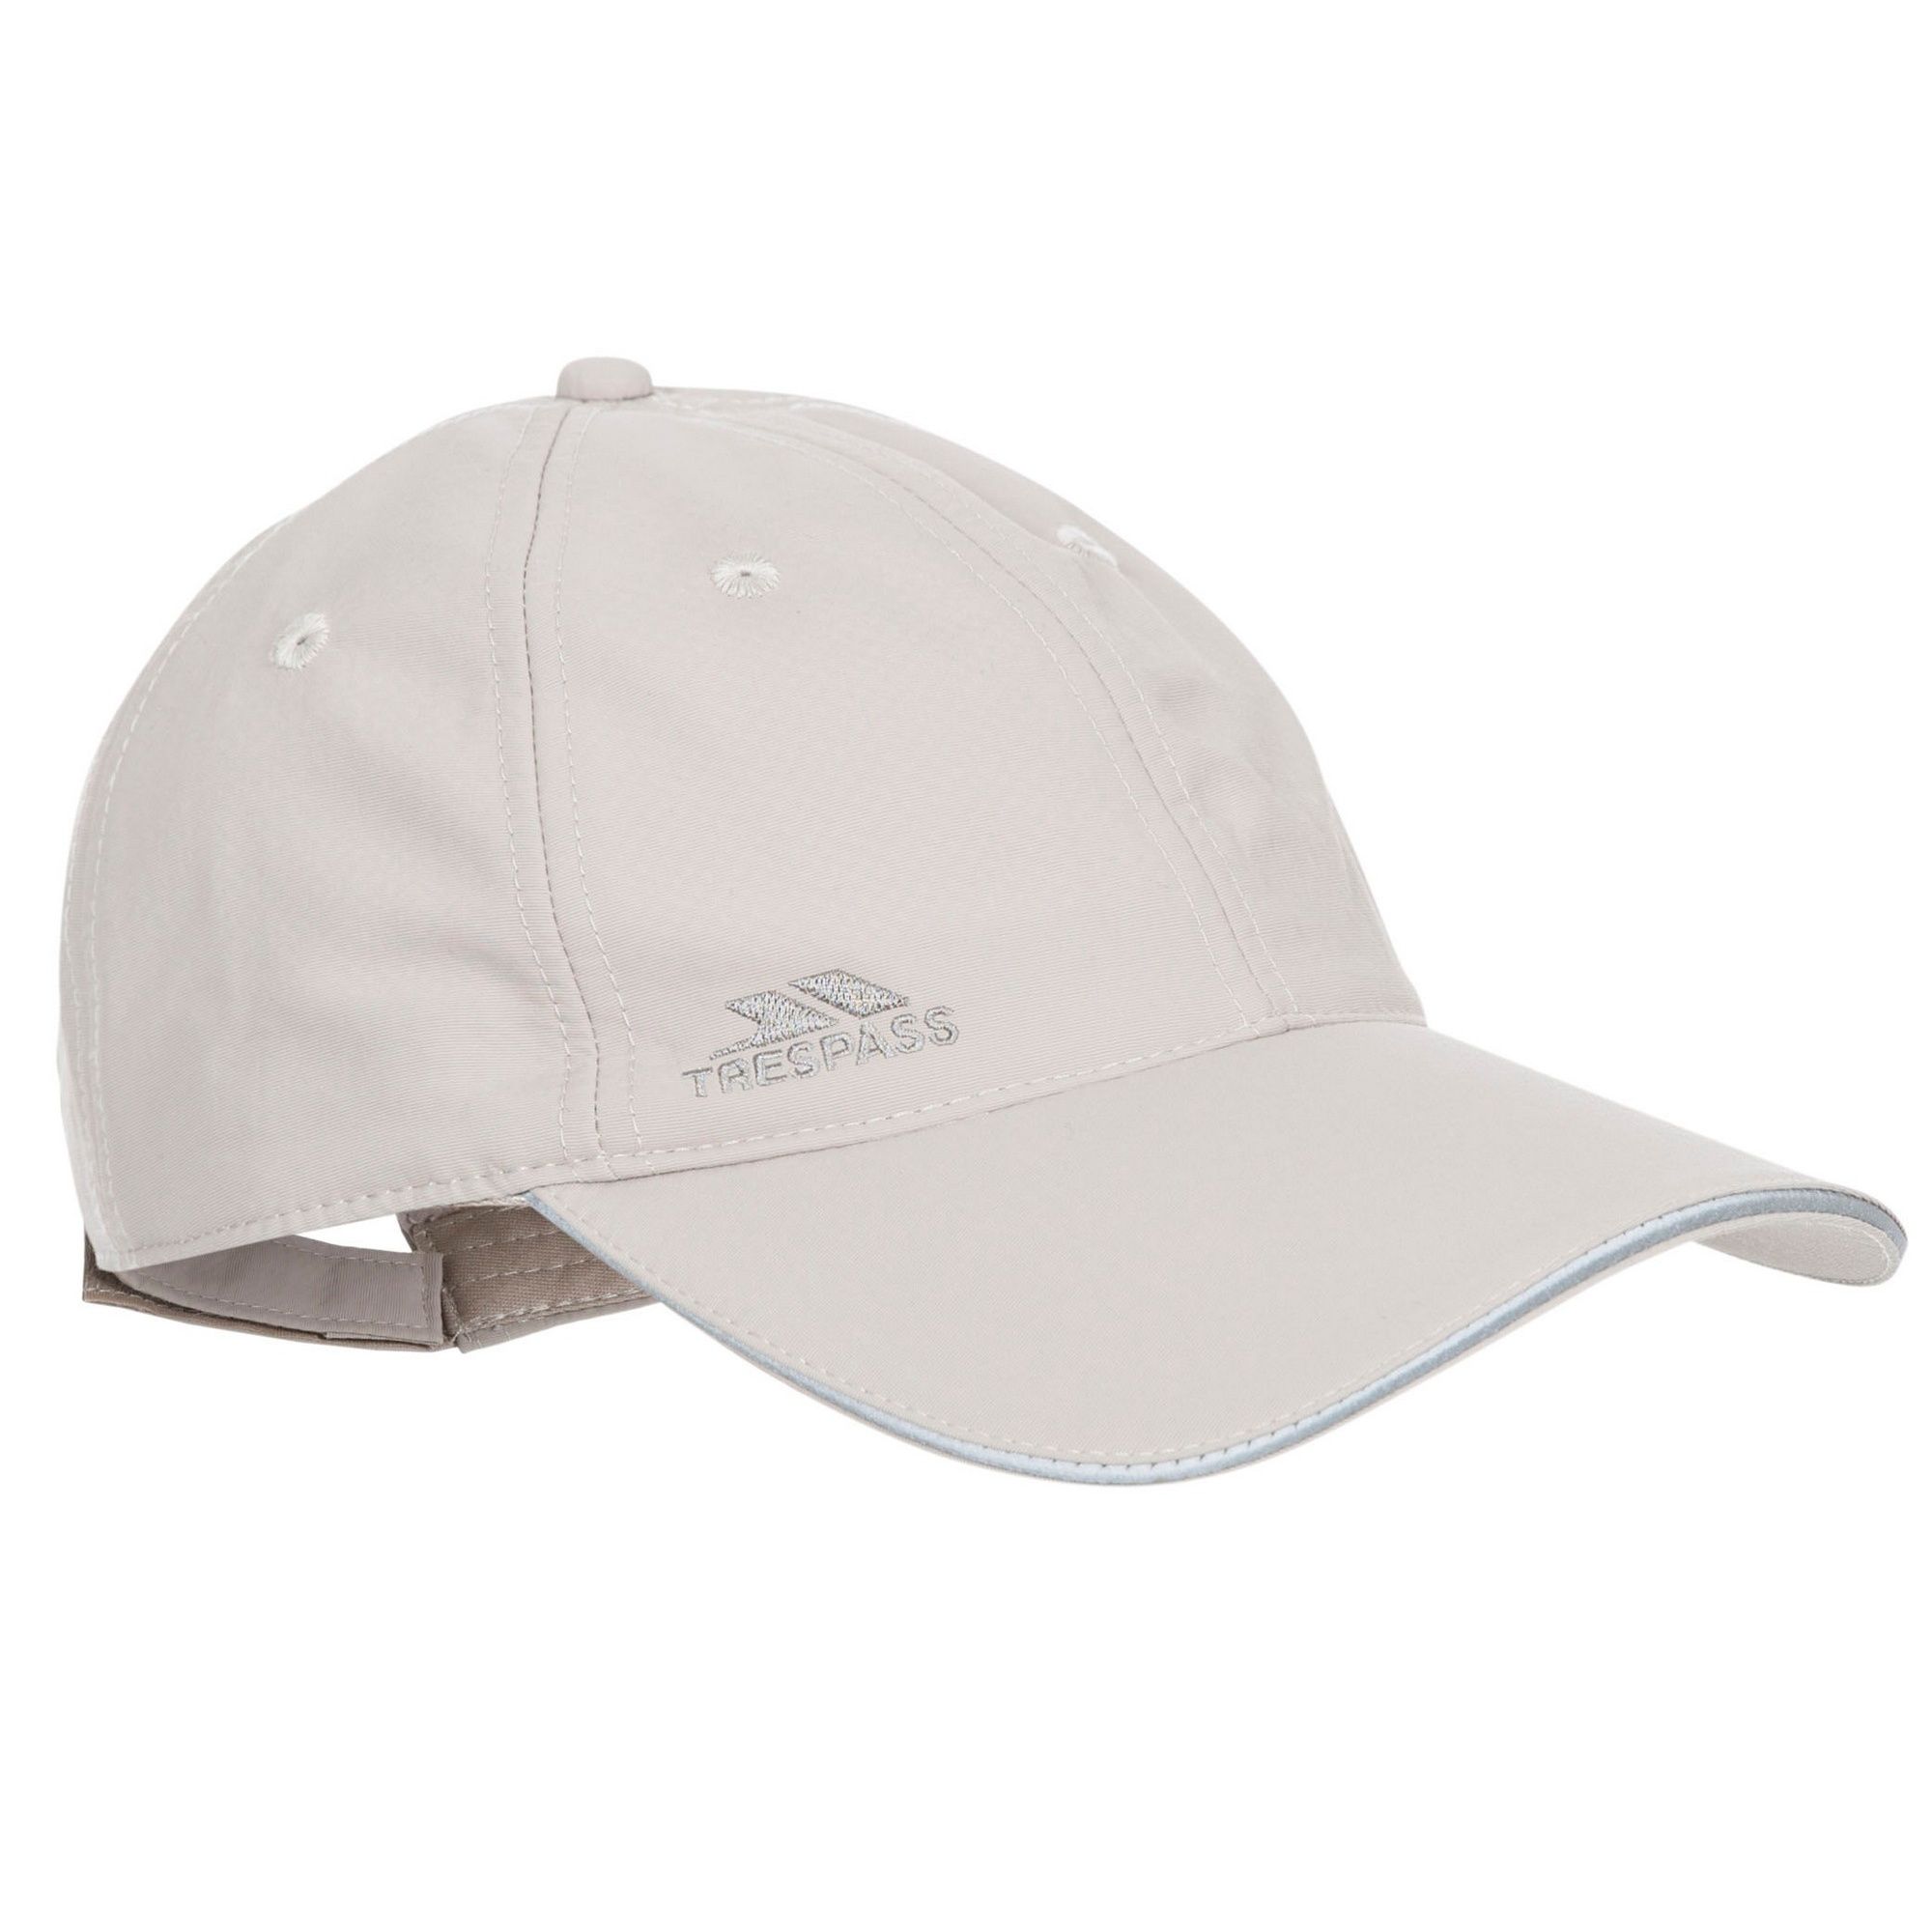 Mens quick drying baseball cap. UPF 40+ sun protection. Moulded peak. Reflective piping. Adjustable strap. 100% Polyamide.